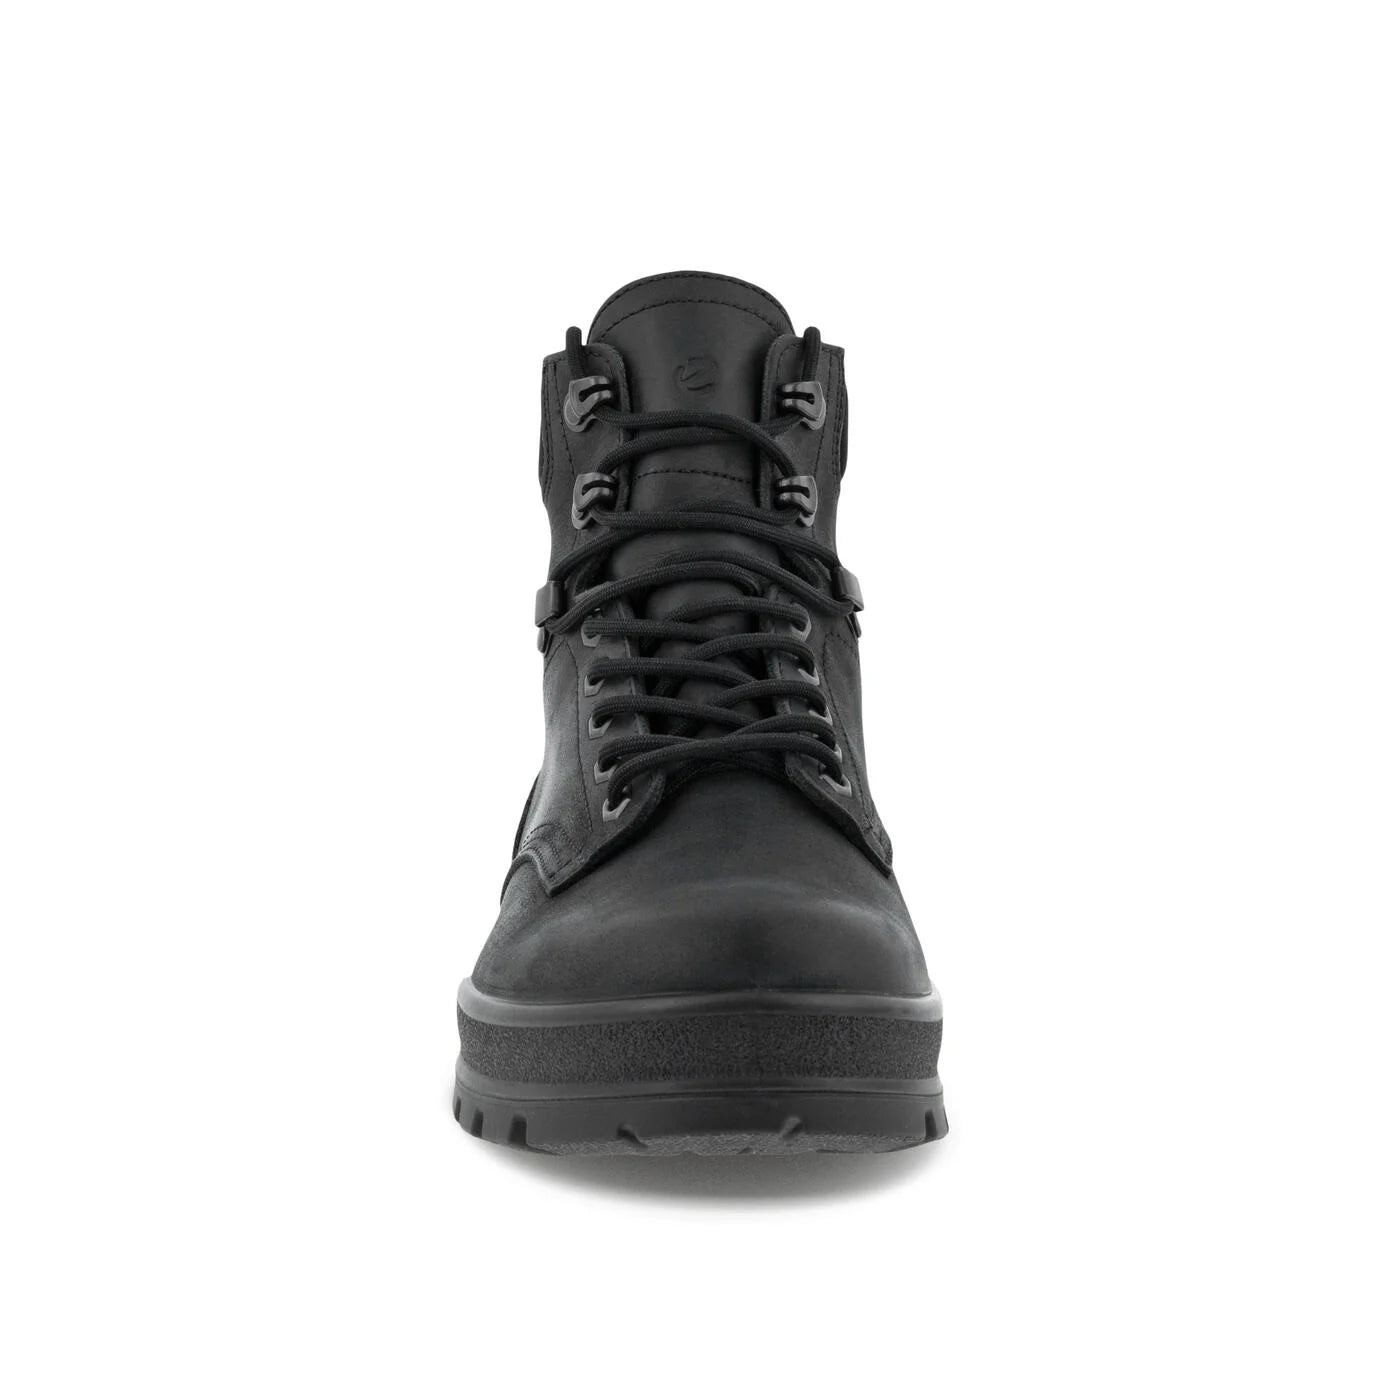 ECCO Men's Track 25 Waterproof Leather Boot - Black